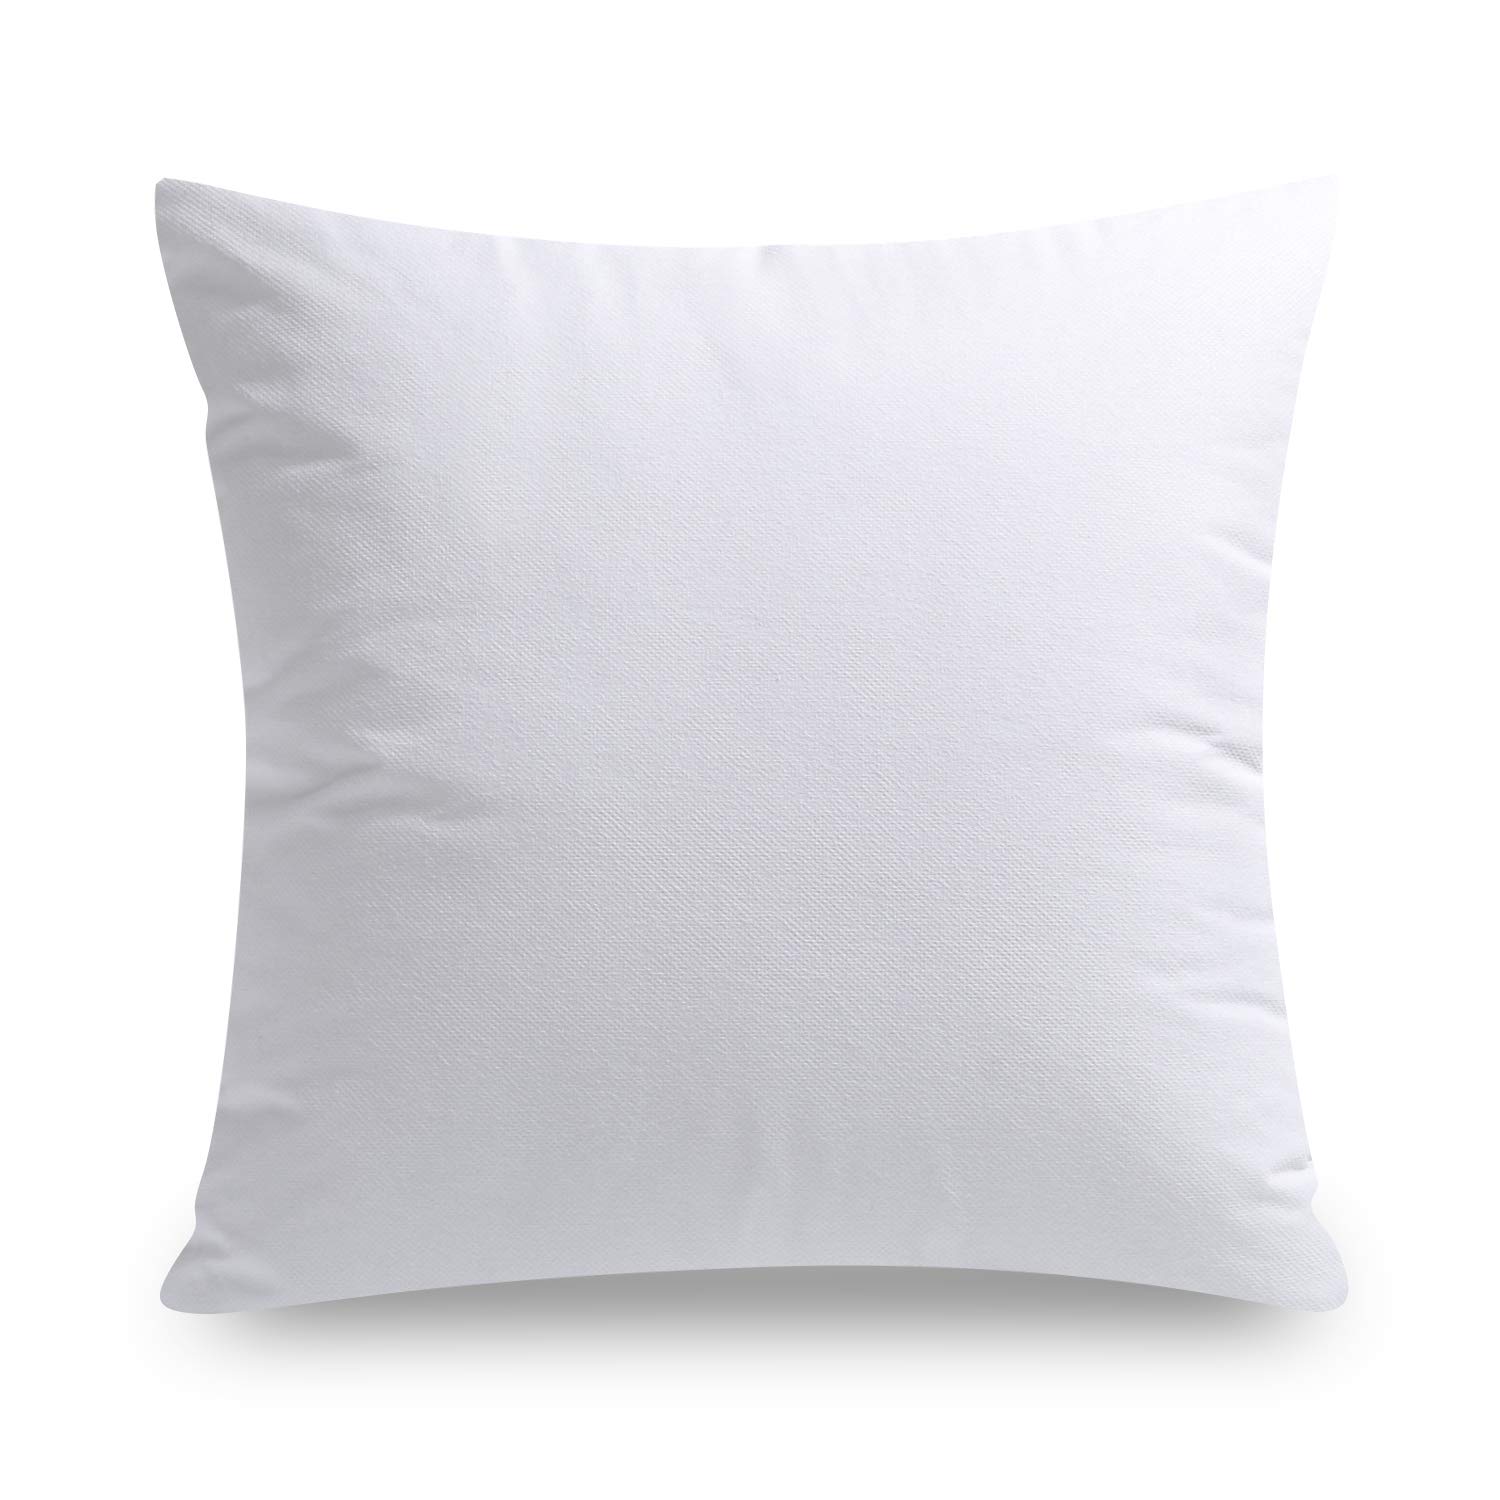 Phantoscope 18 x 18 Pillow Inserts Set of 4 Hypoallergenic Square Form Decorati